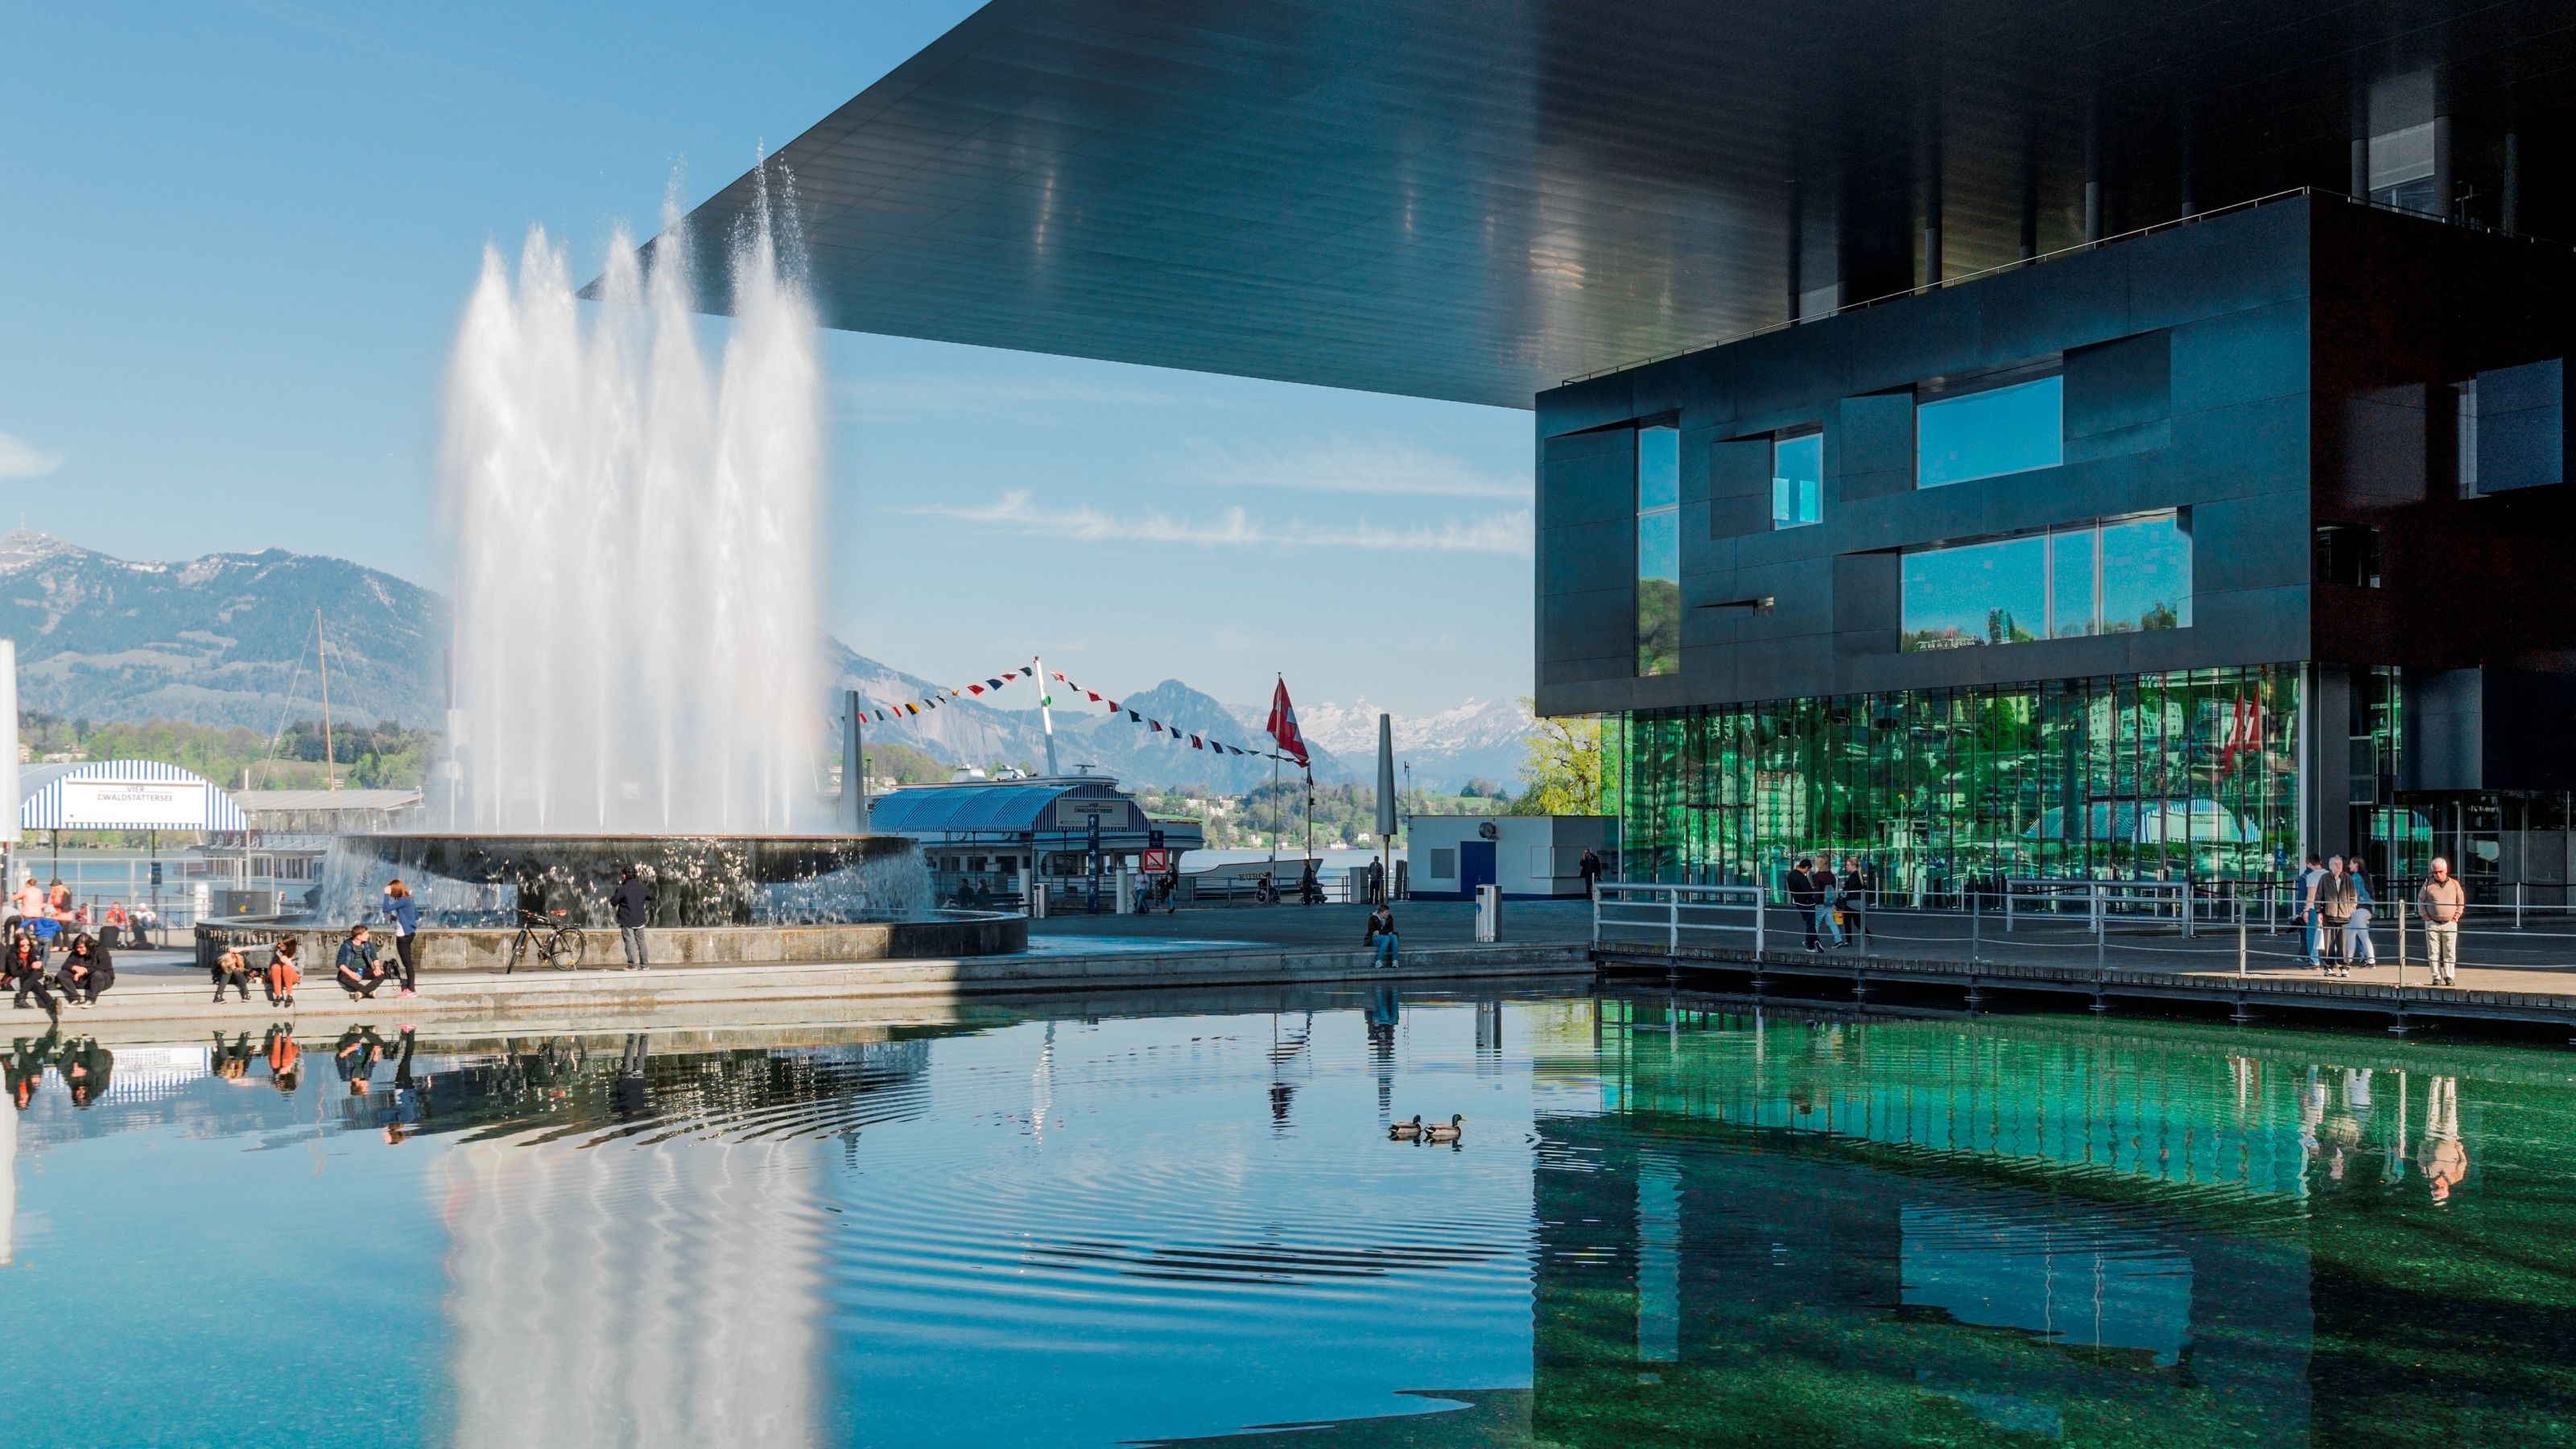 KKL Luzern Culture and Convention Centre | Switzerland Tourism